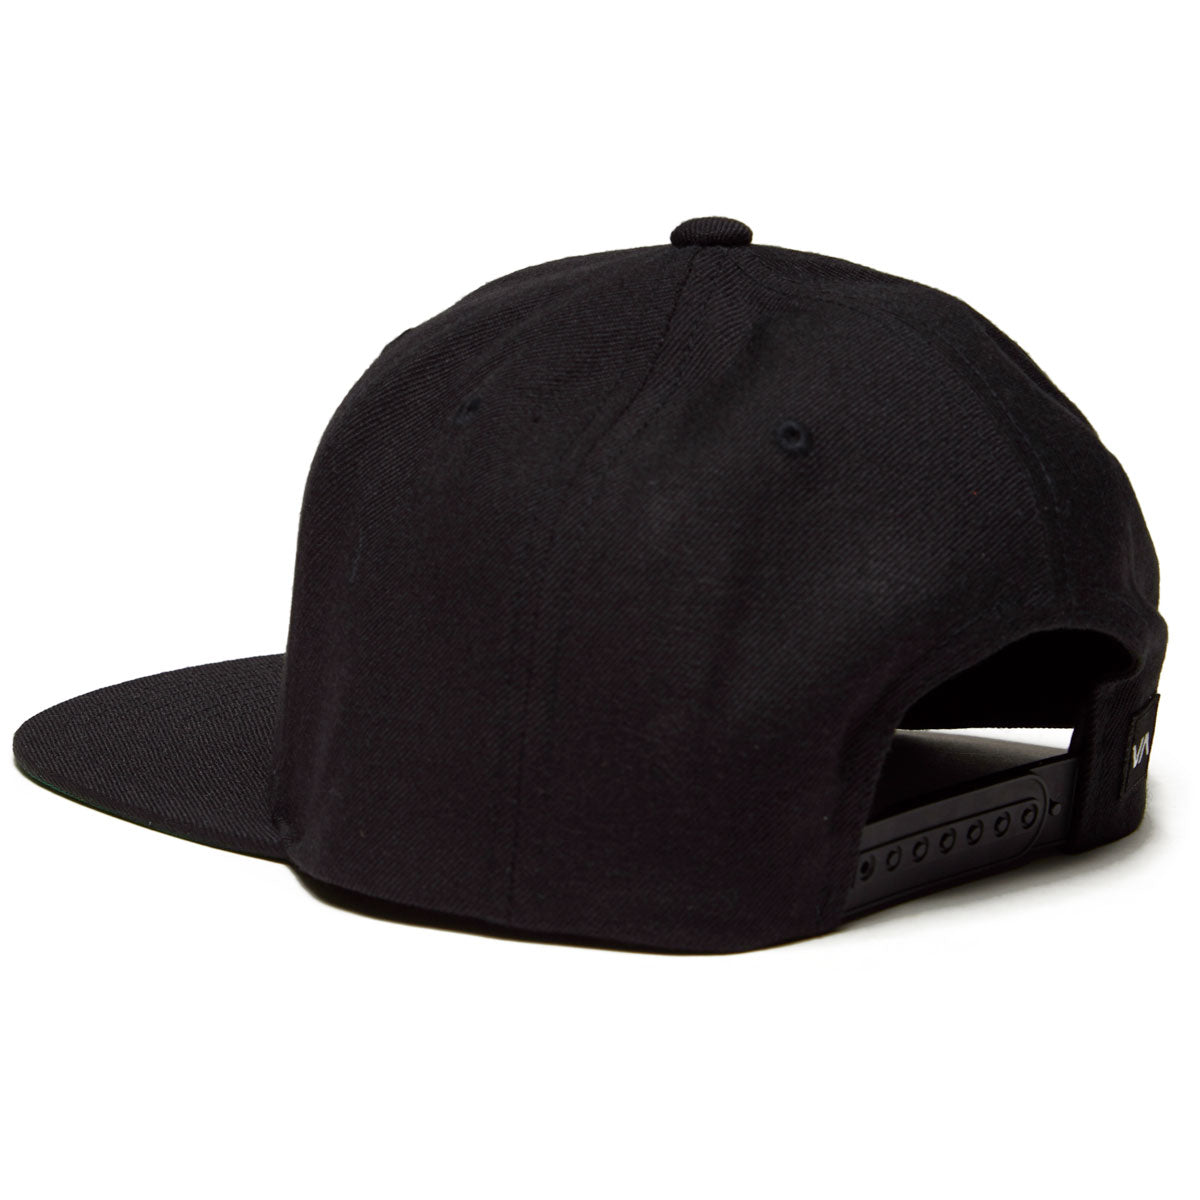 RVCA Commonwealth Snapback Hat - Black/White image 2